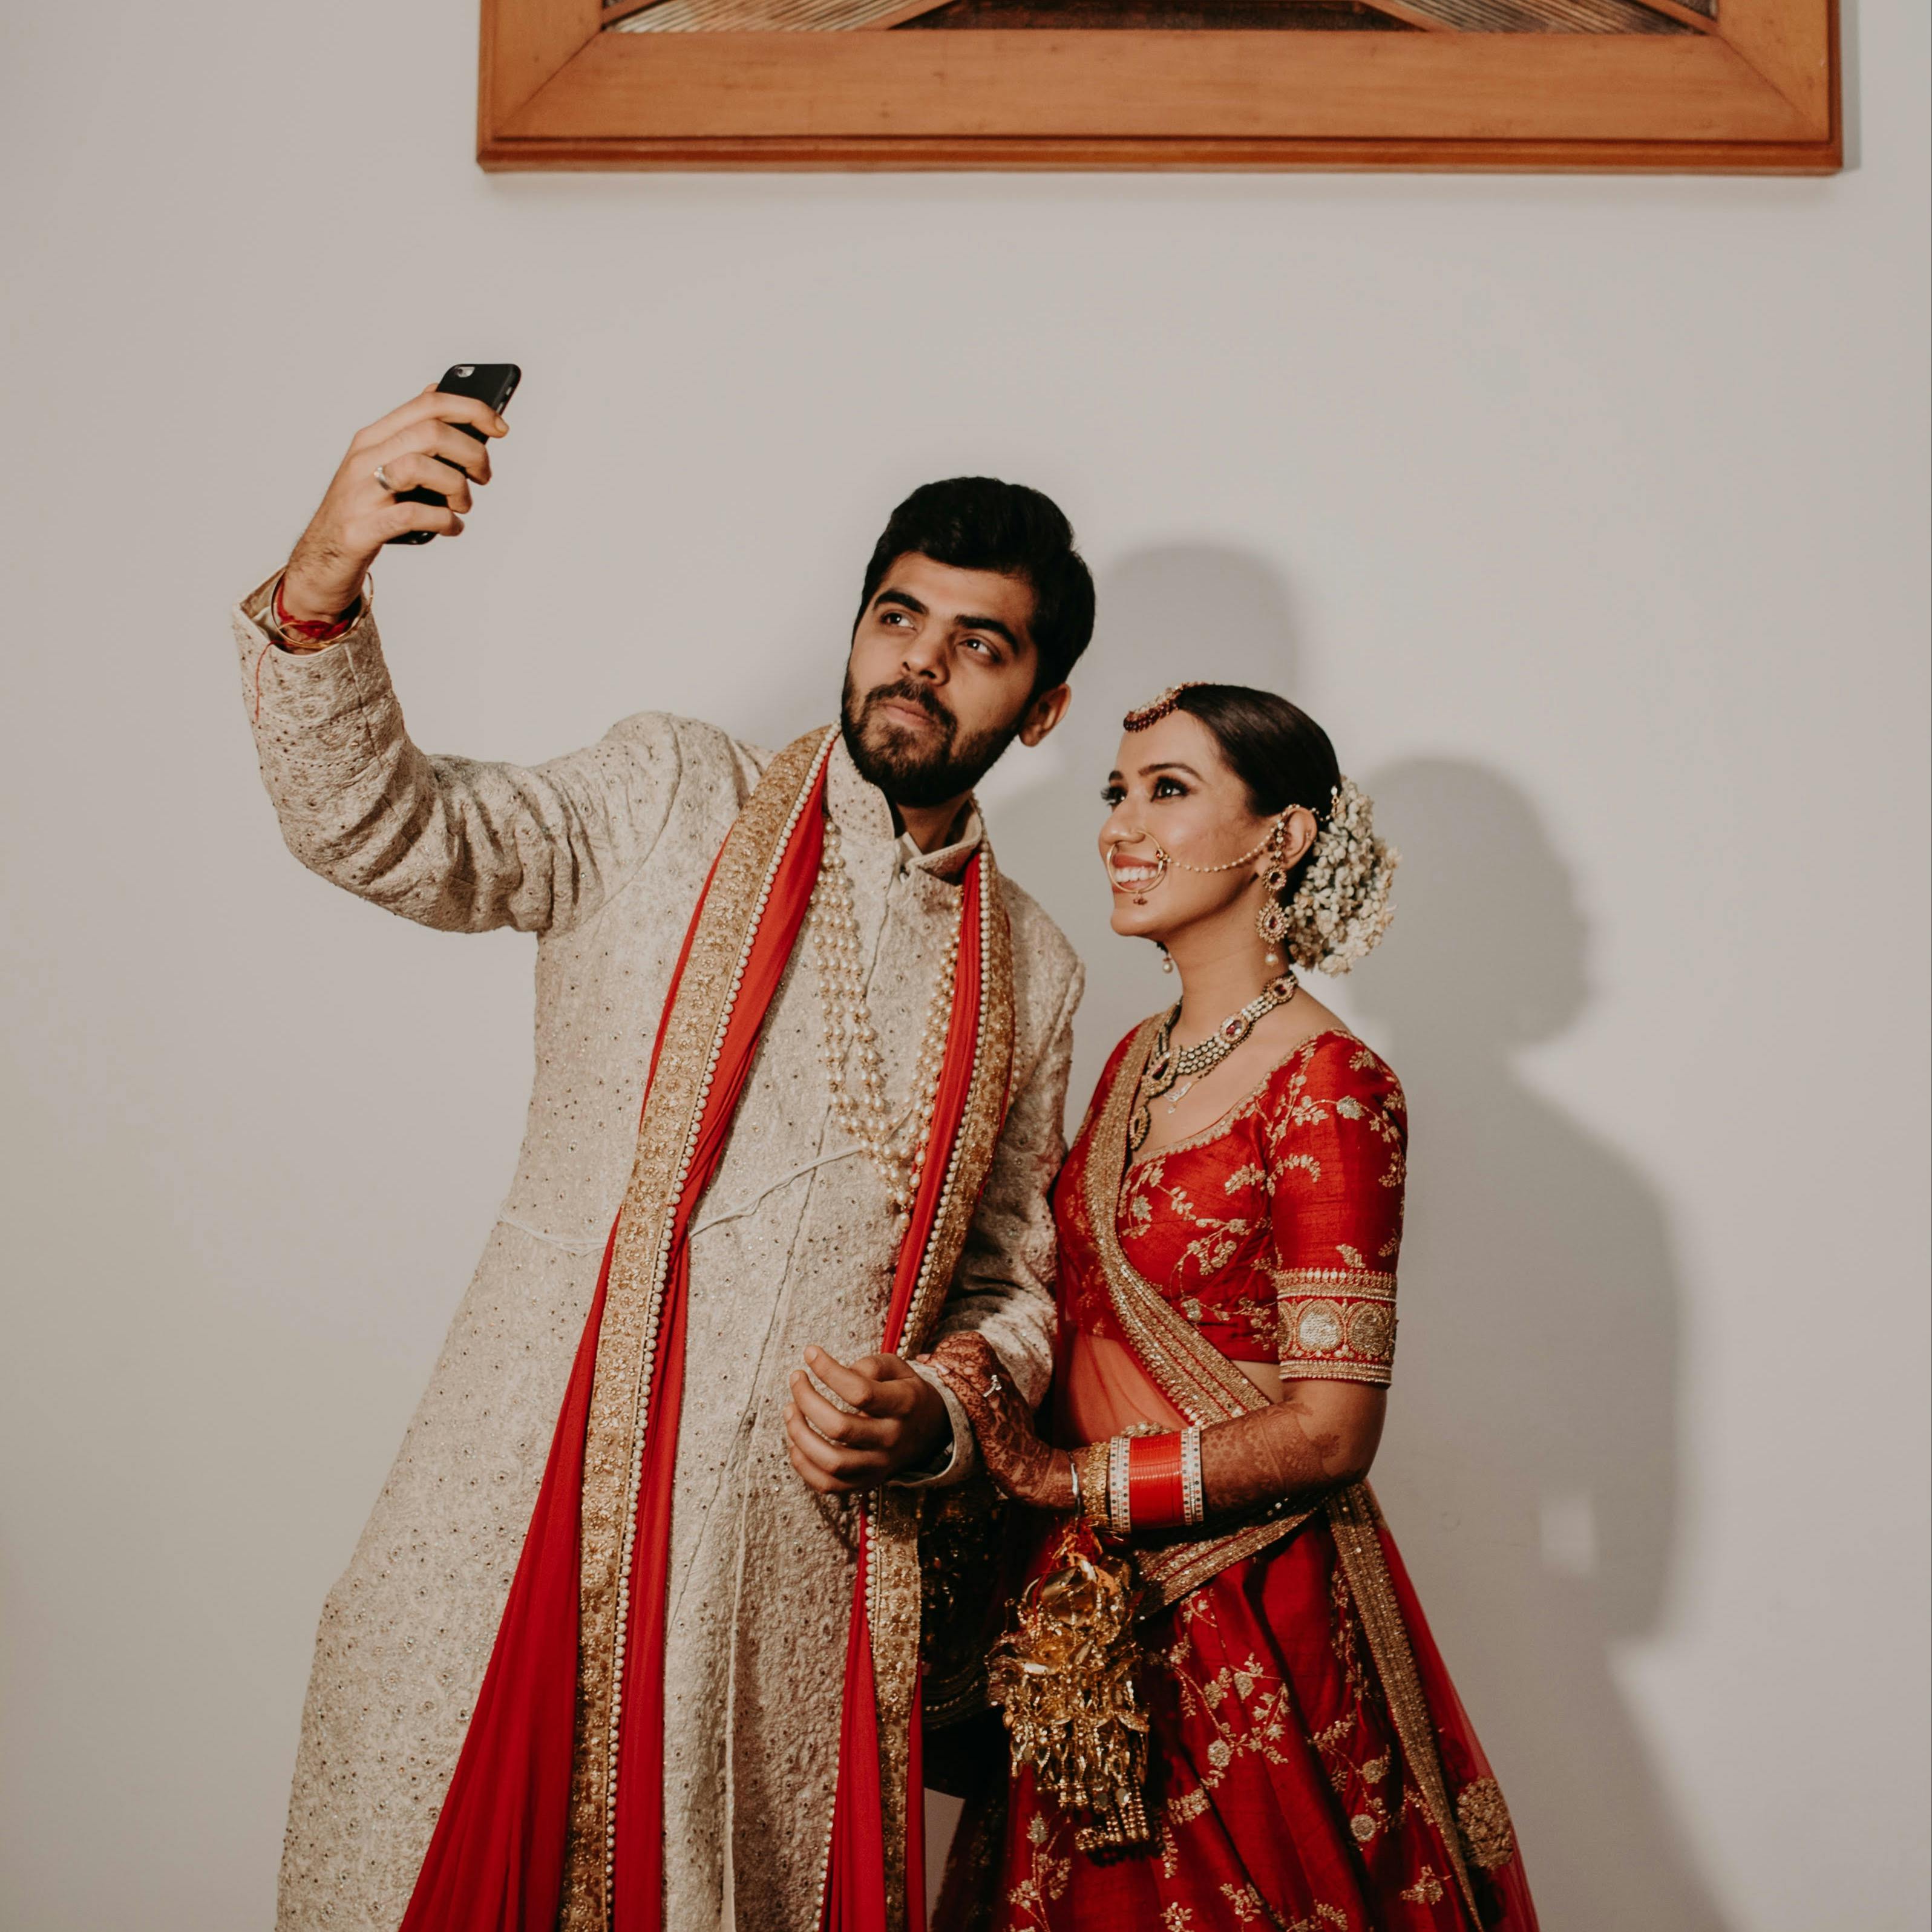 Sabyasachi's lehengas are popular wedding wear. (Mehar Sindhu Batra)